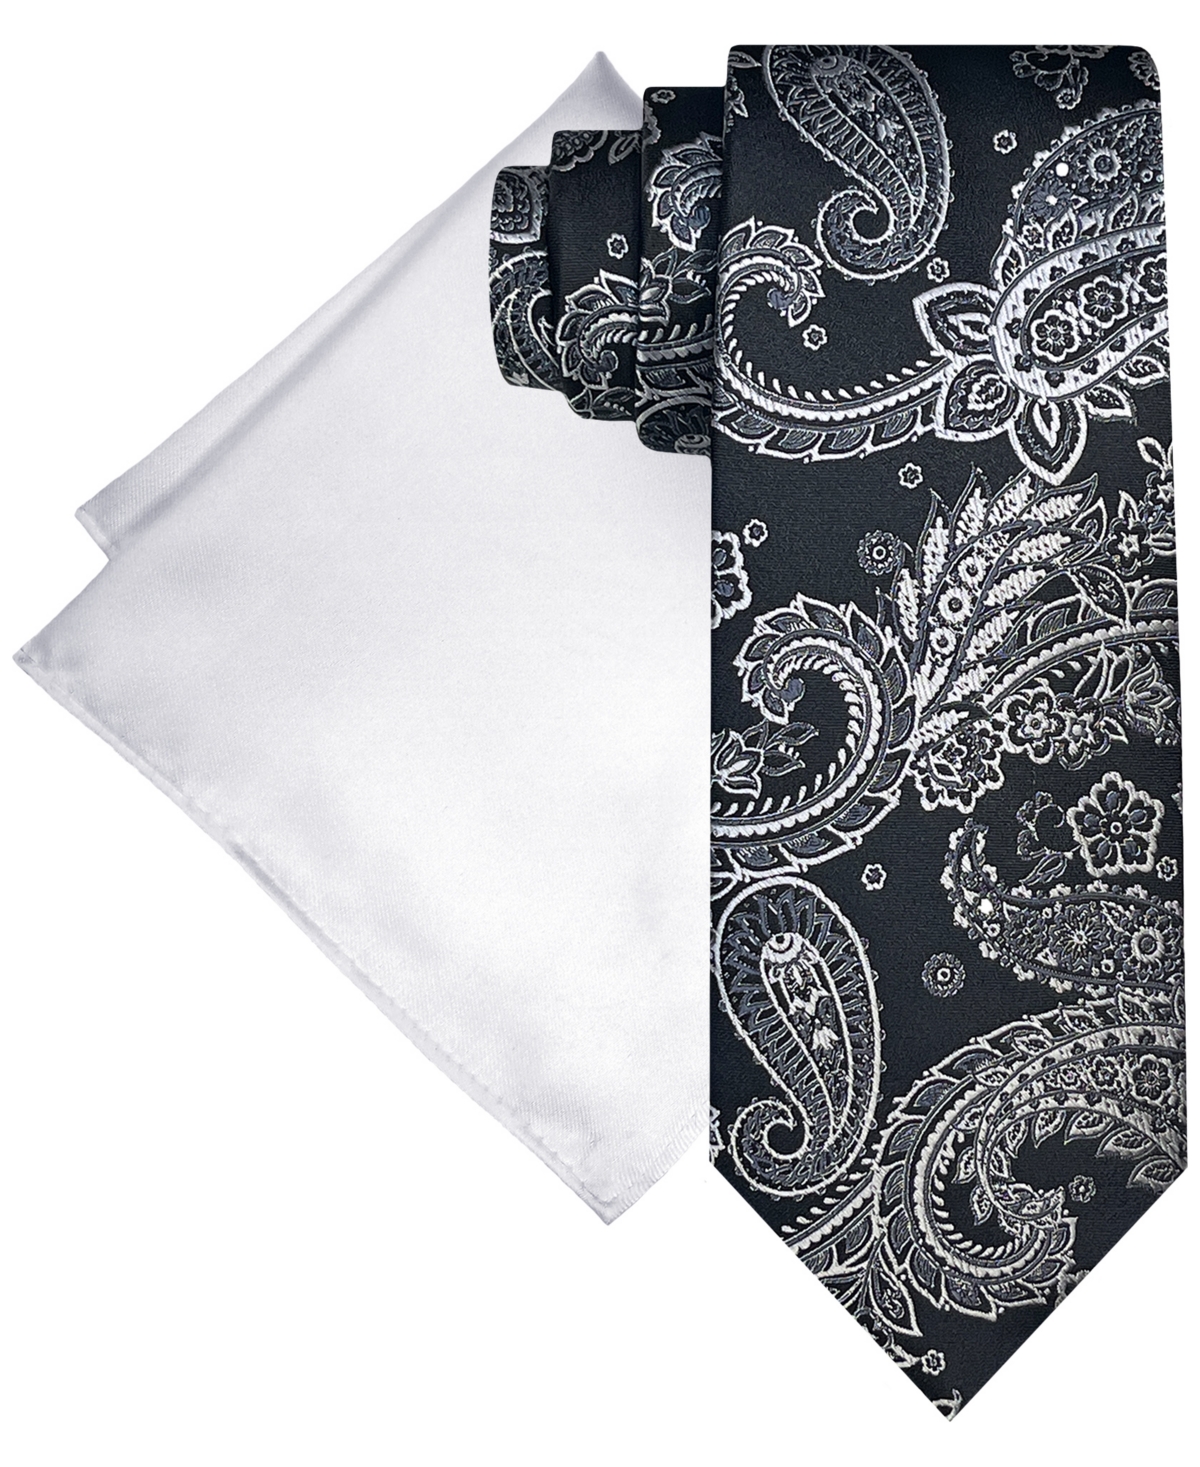 Men's Paisley Tie & Solid Pocket Square Set - Black